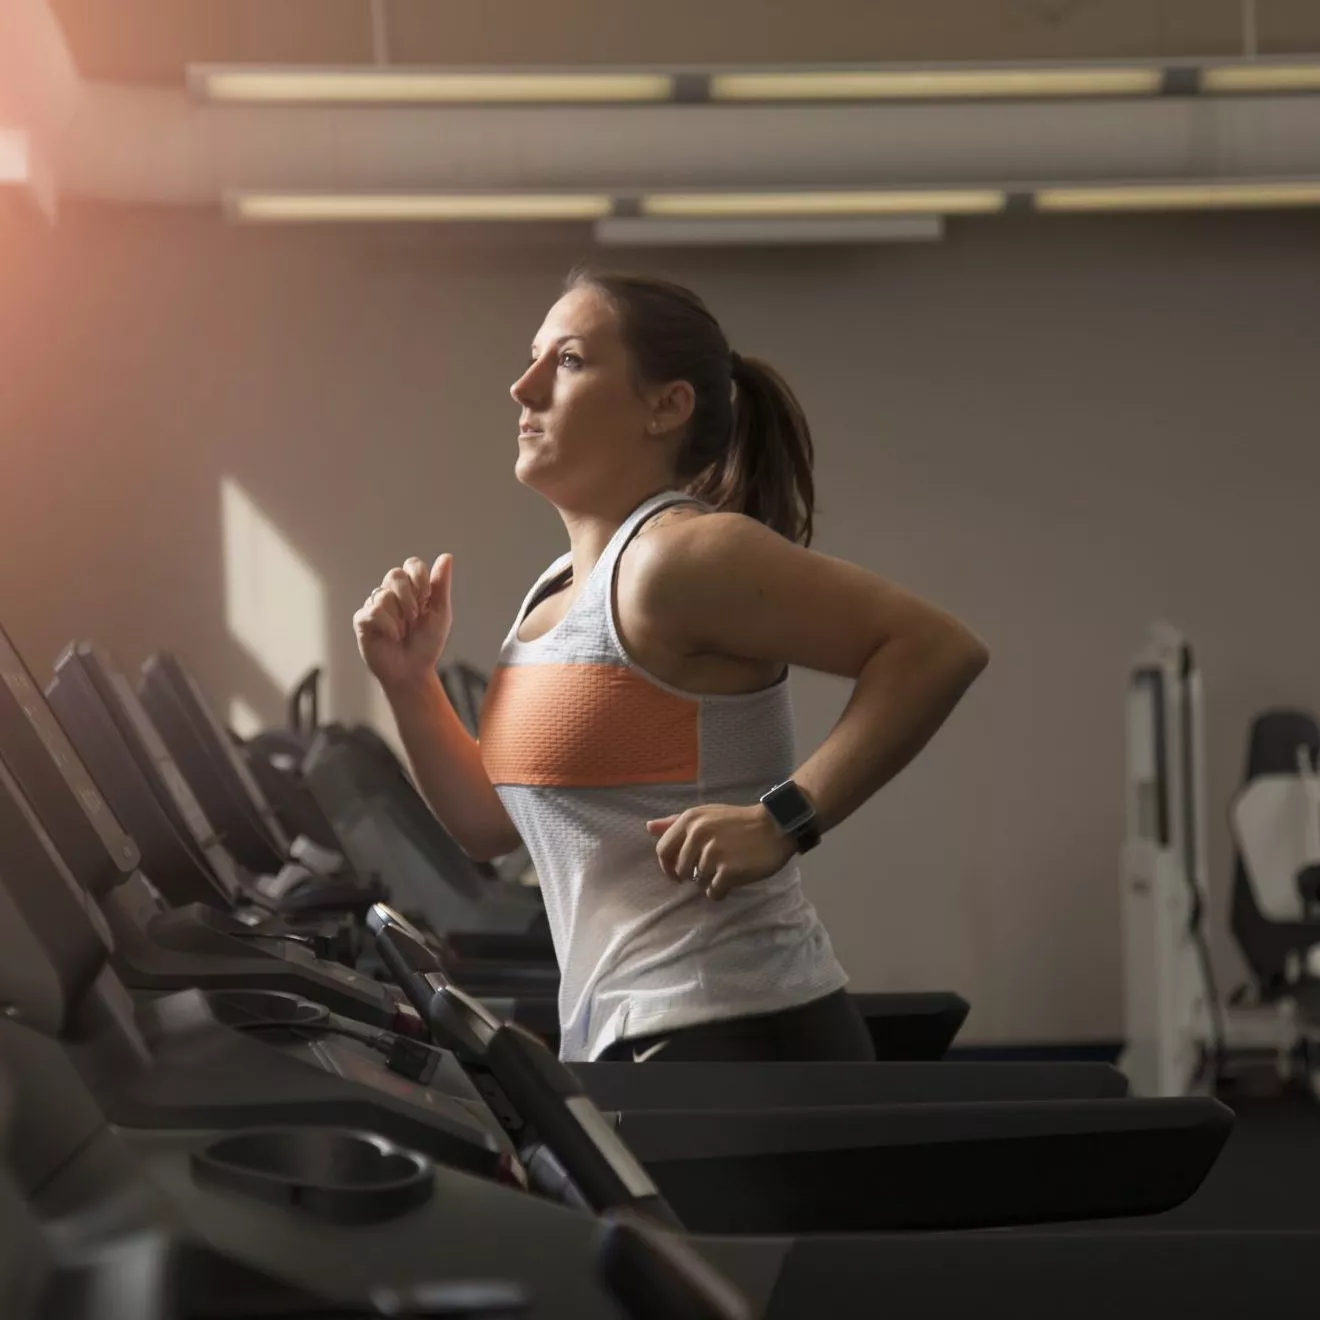 Female running on treadmill doing intervals as workout motivation